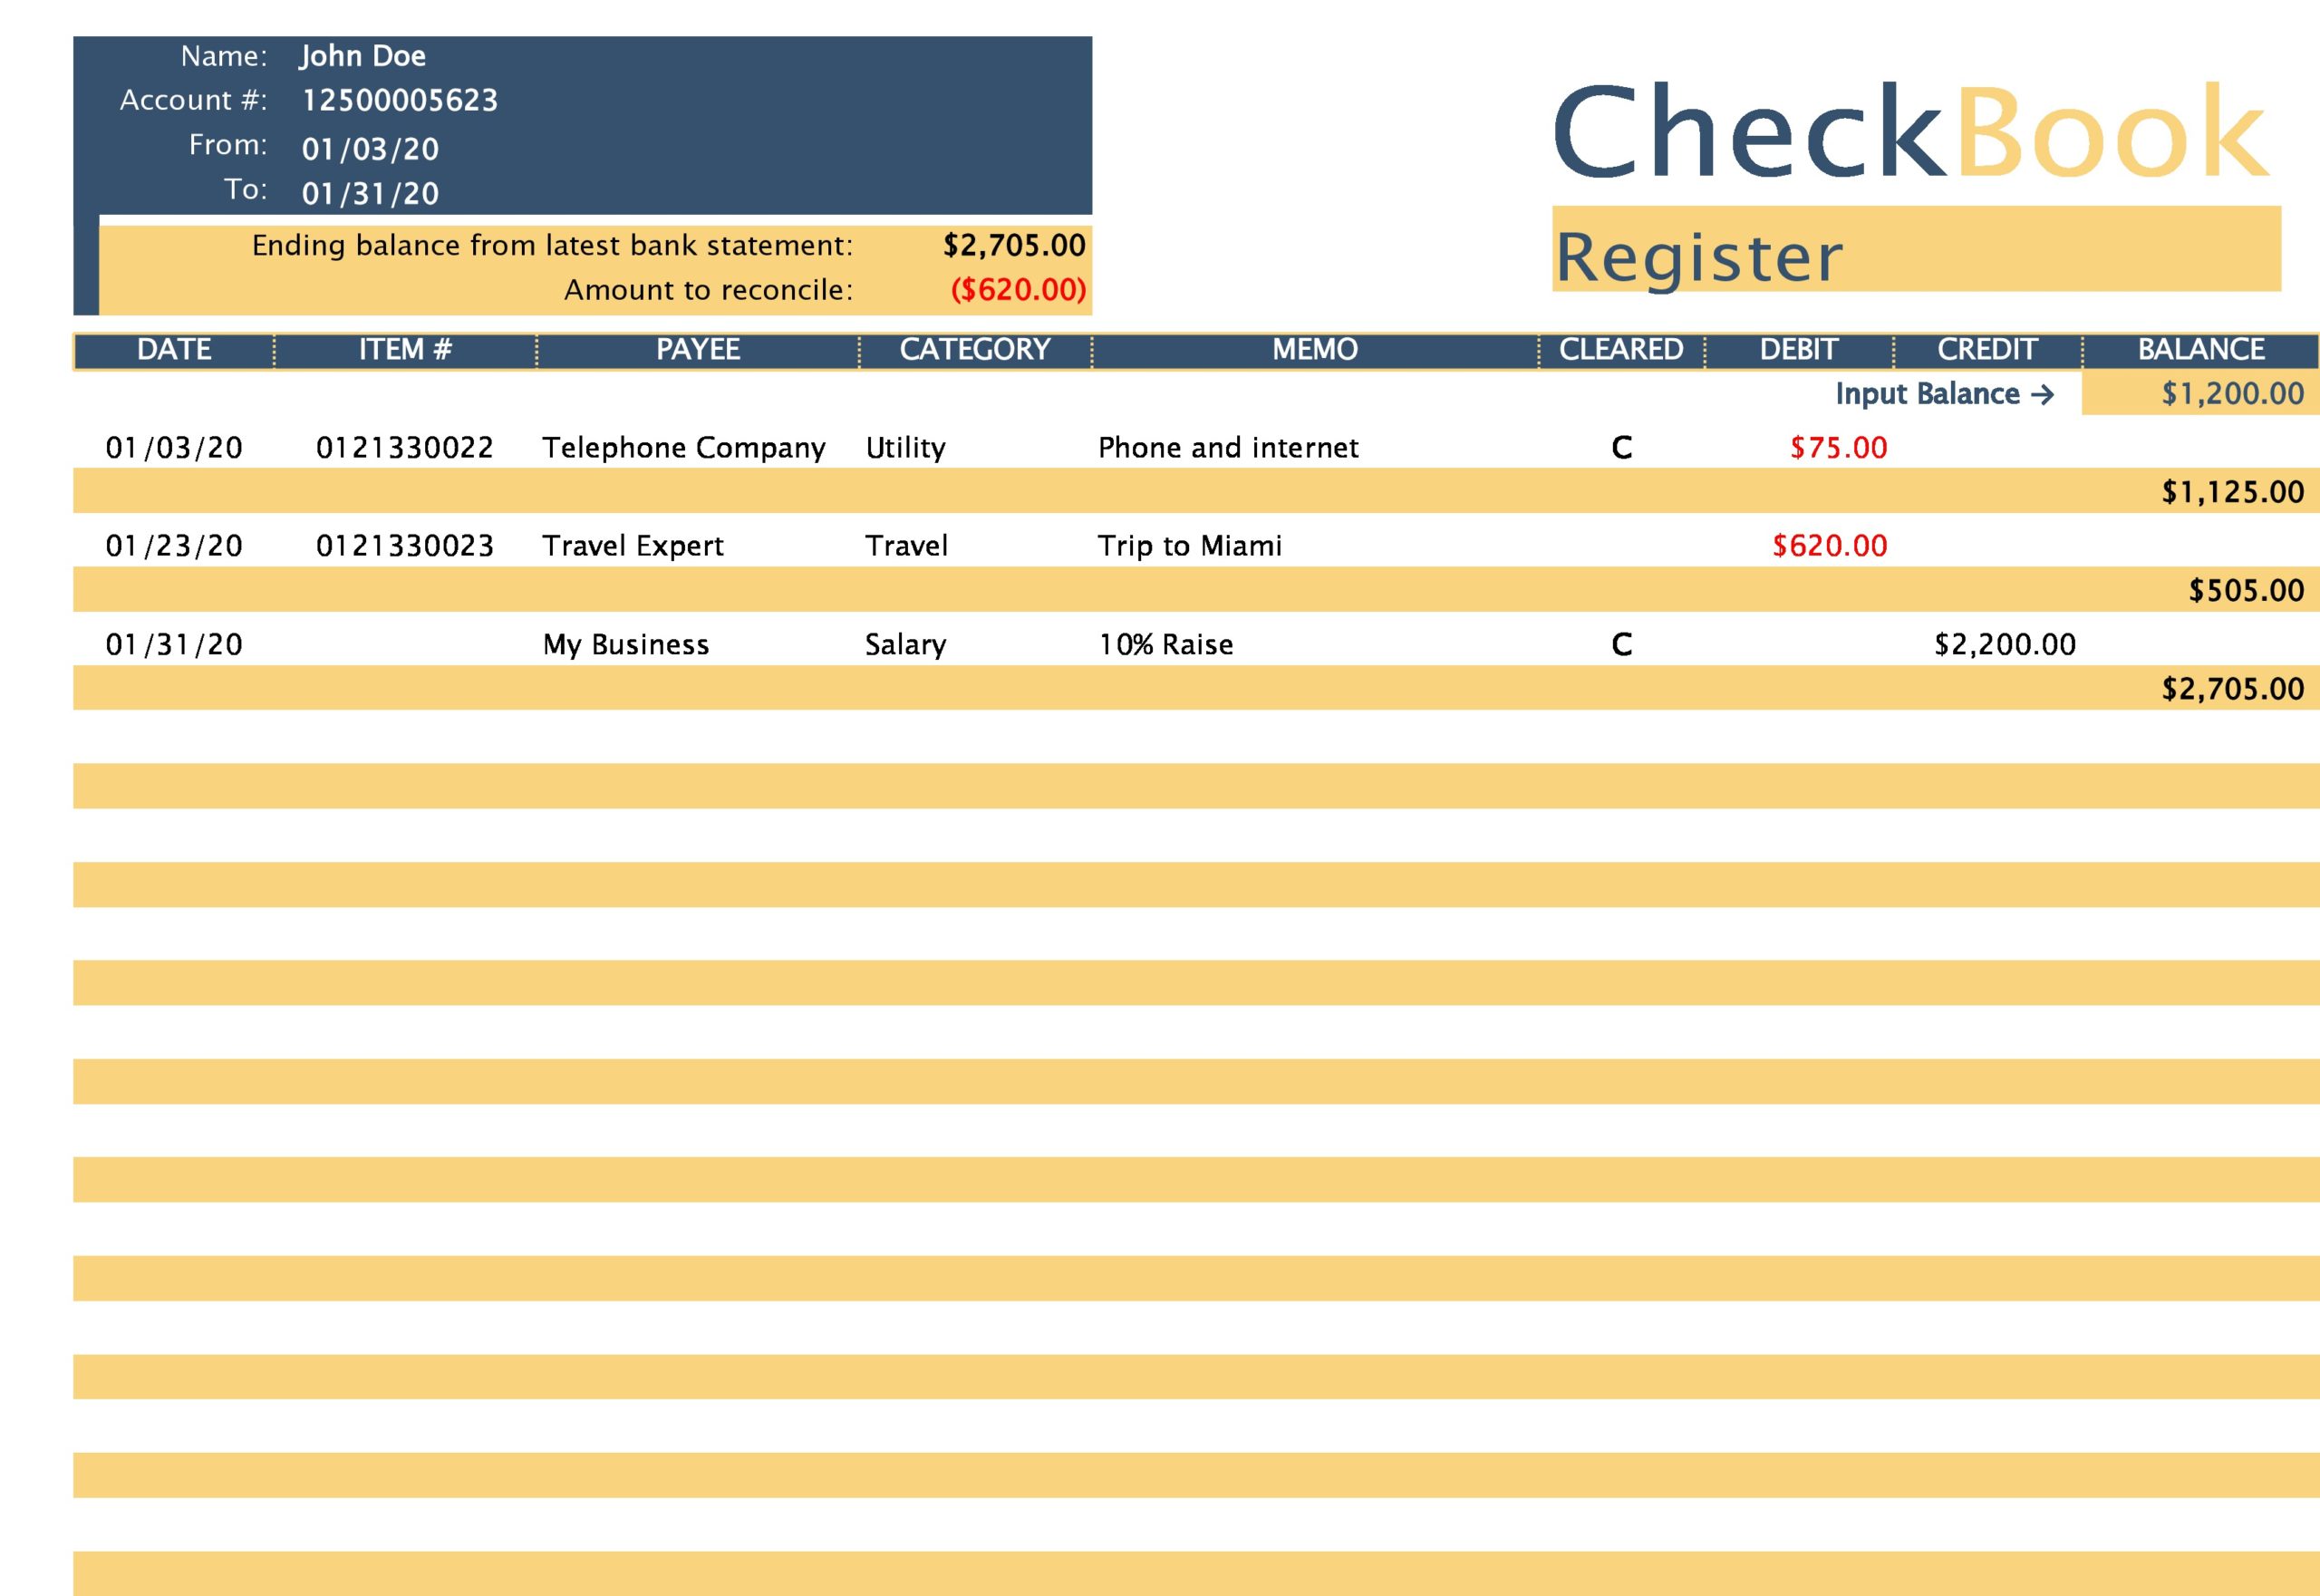 Excel Checkbook Register Template